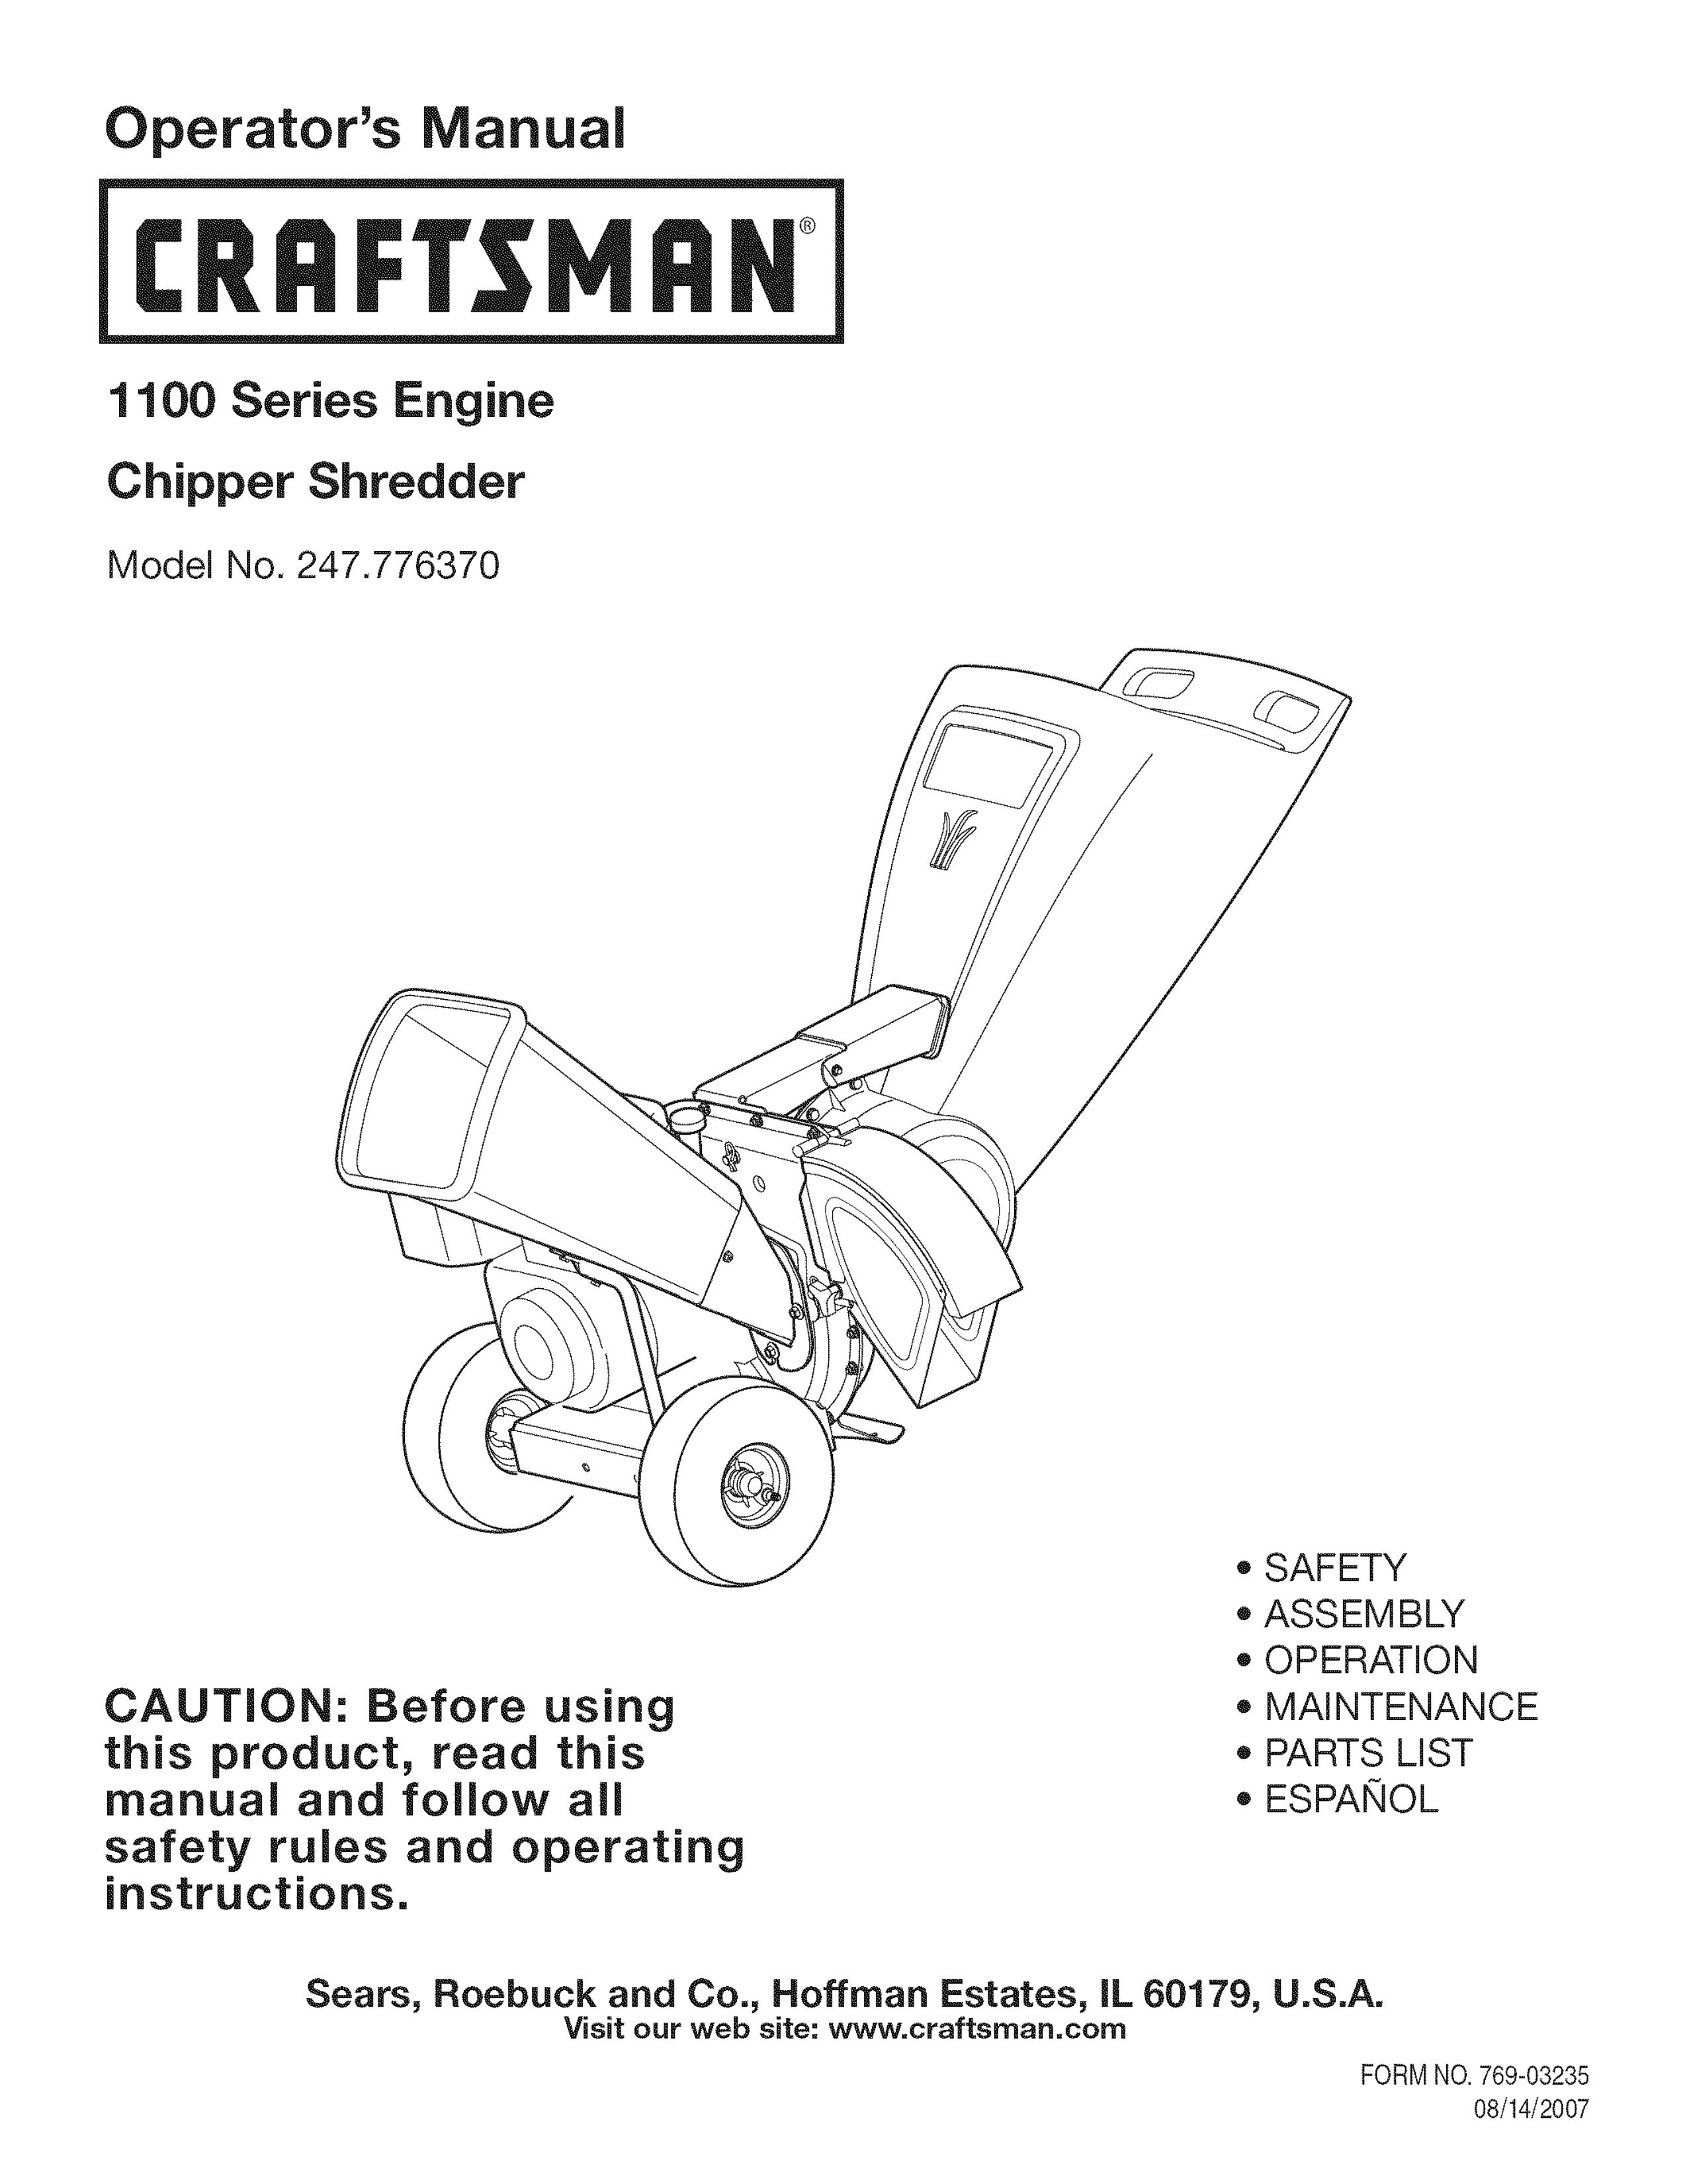 Craftsman 247.776370 Chipper User Manual